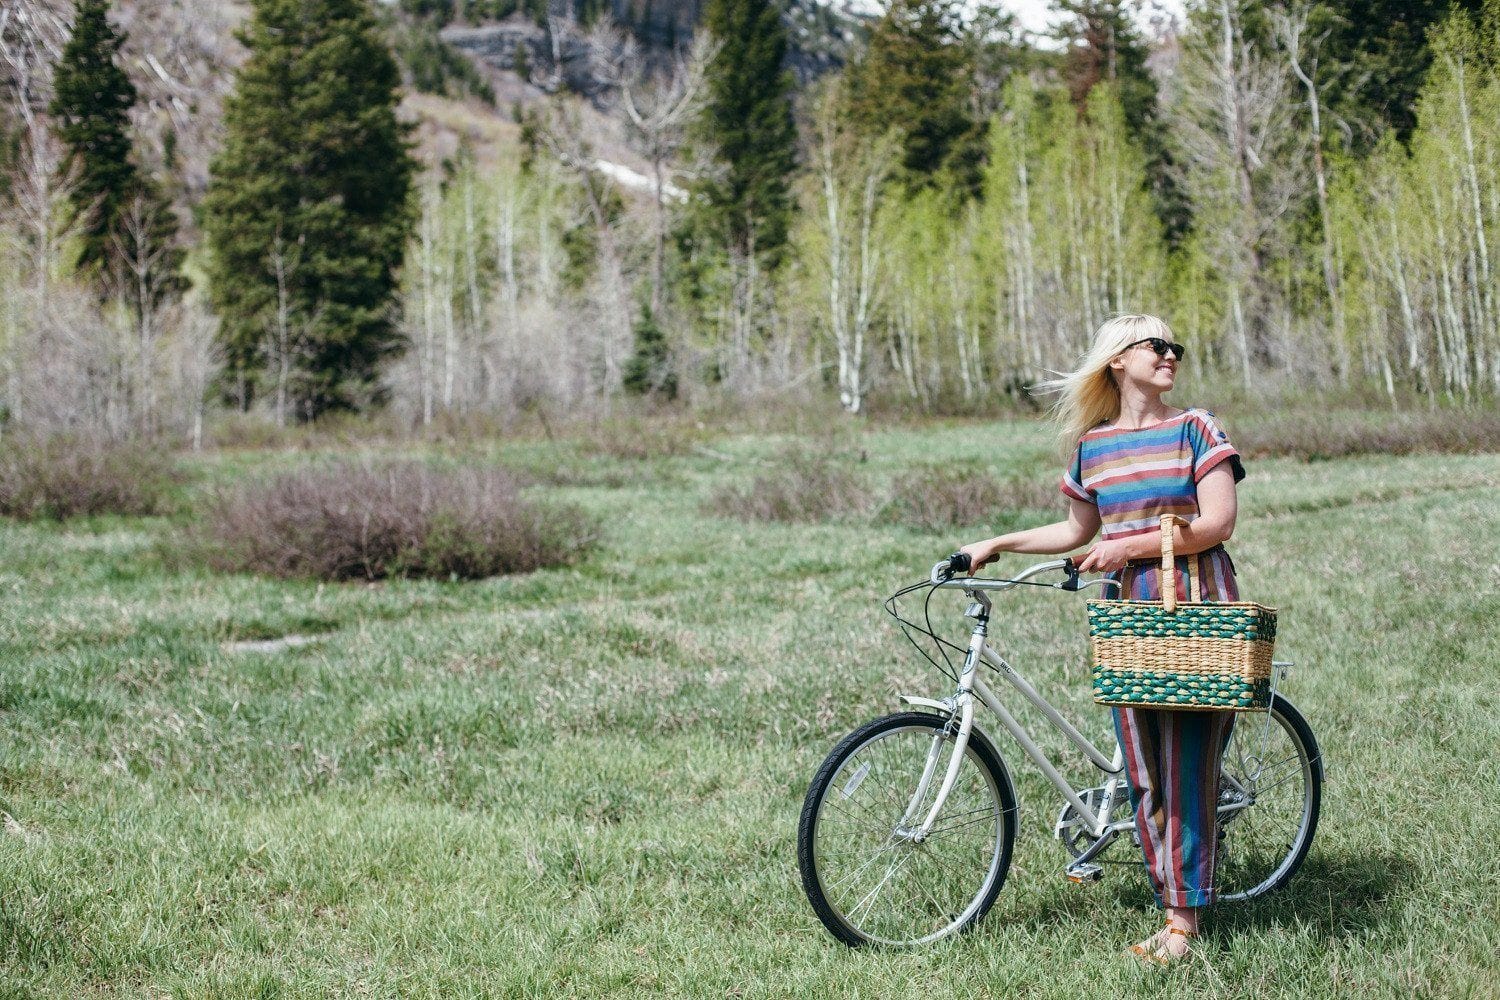 Ladies Who Bike: Real Women on City Bikes